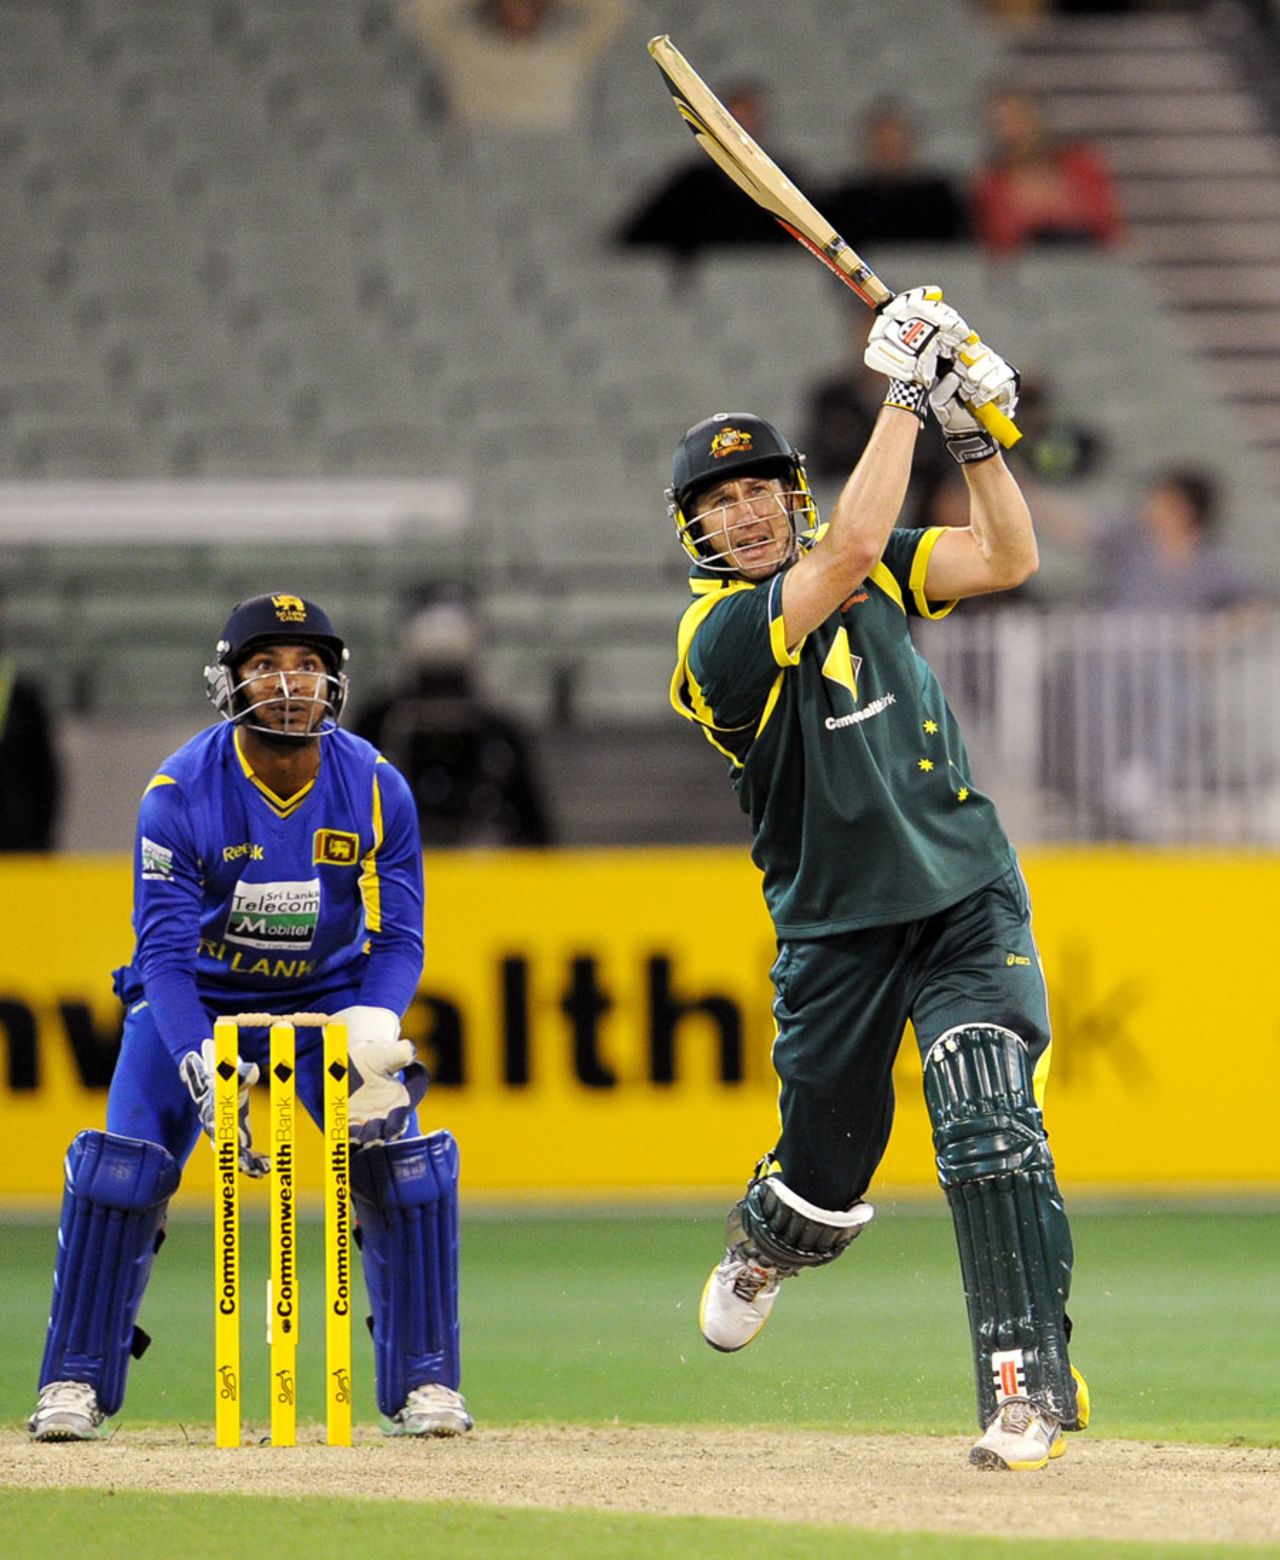 David Hussey launches one down the ground, Australia v Sri Lanka, CB series, Melbourne, March 2, 2012